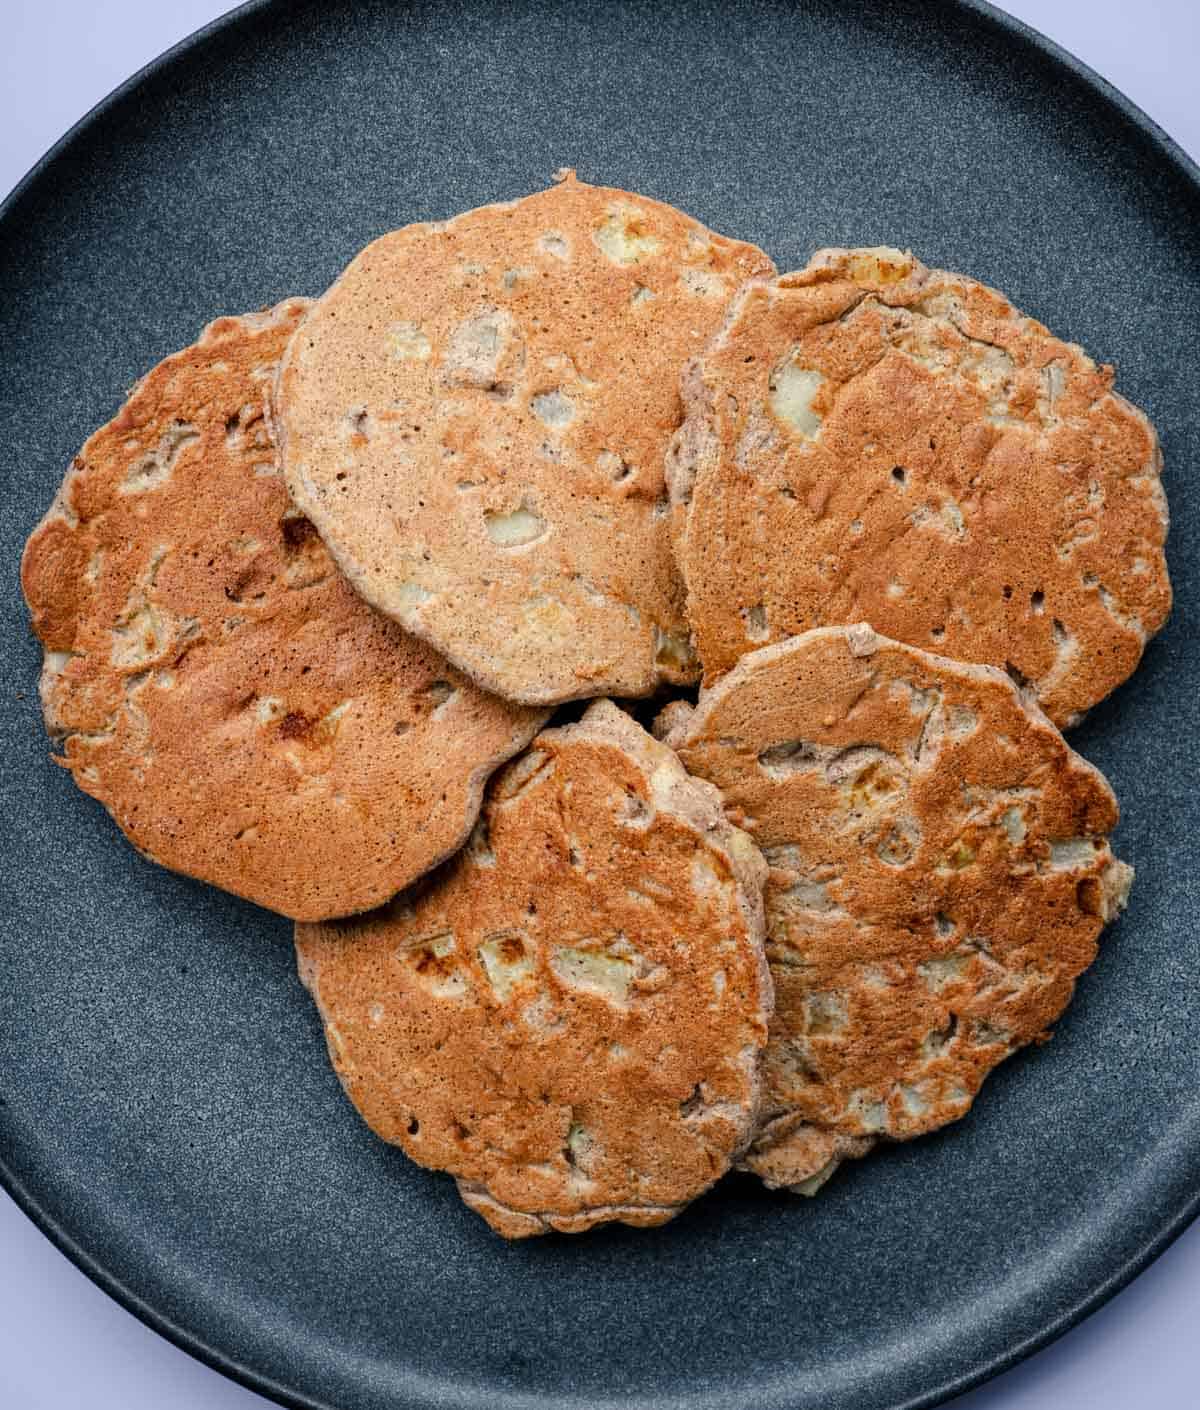 Apple buckwheat pancakes laid flat on a dark grey plate